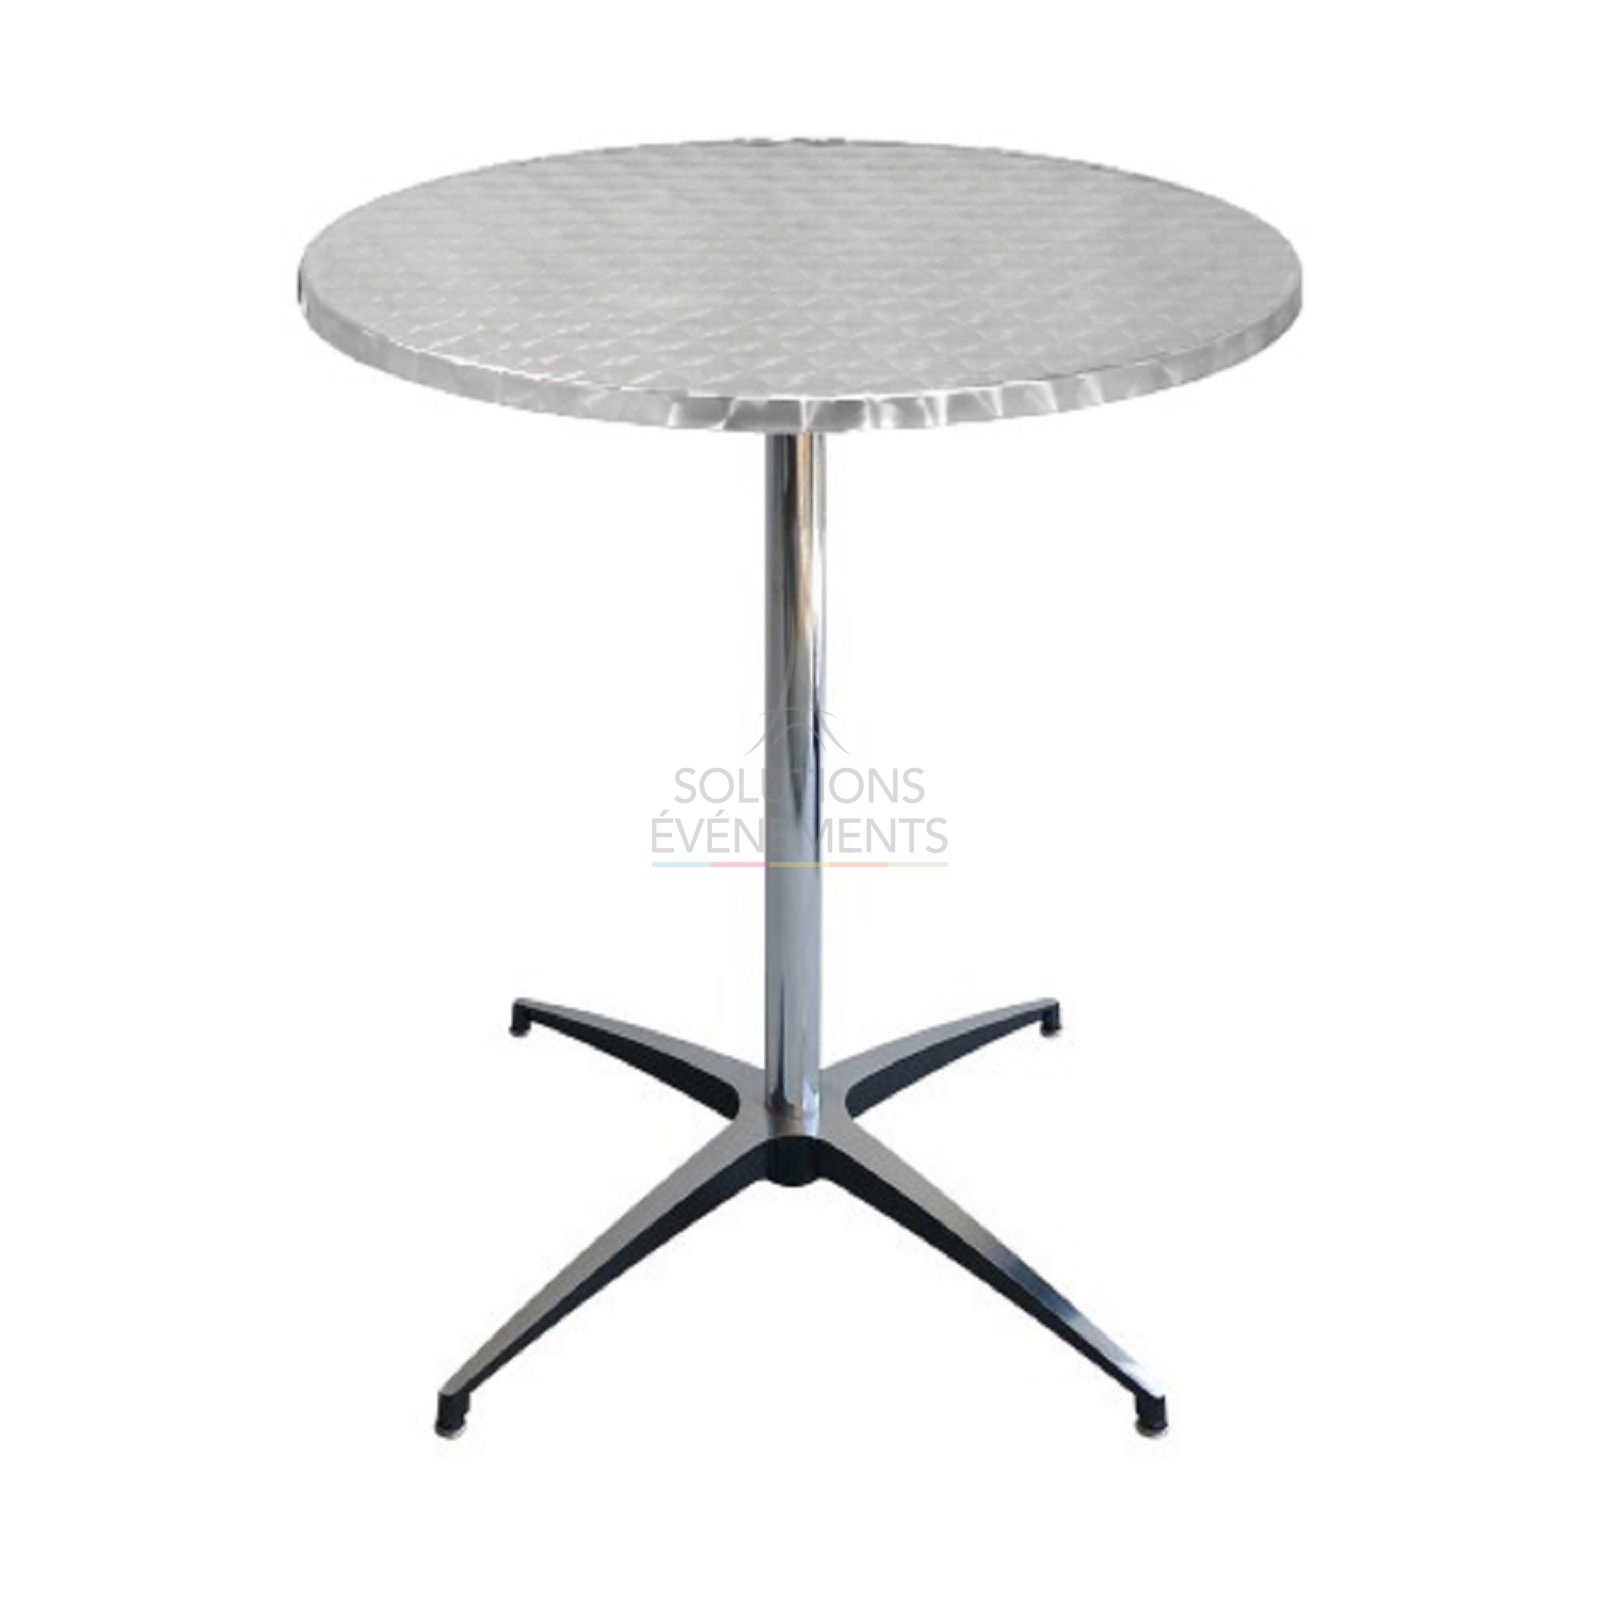 Bistro pedestal table rental, diameter 60cm